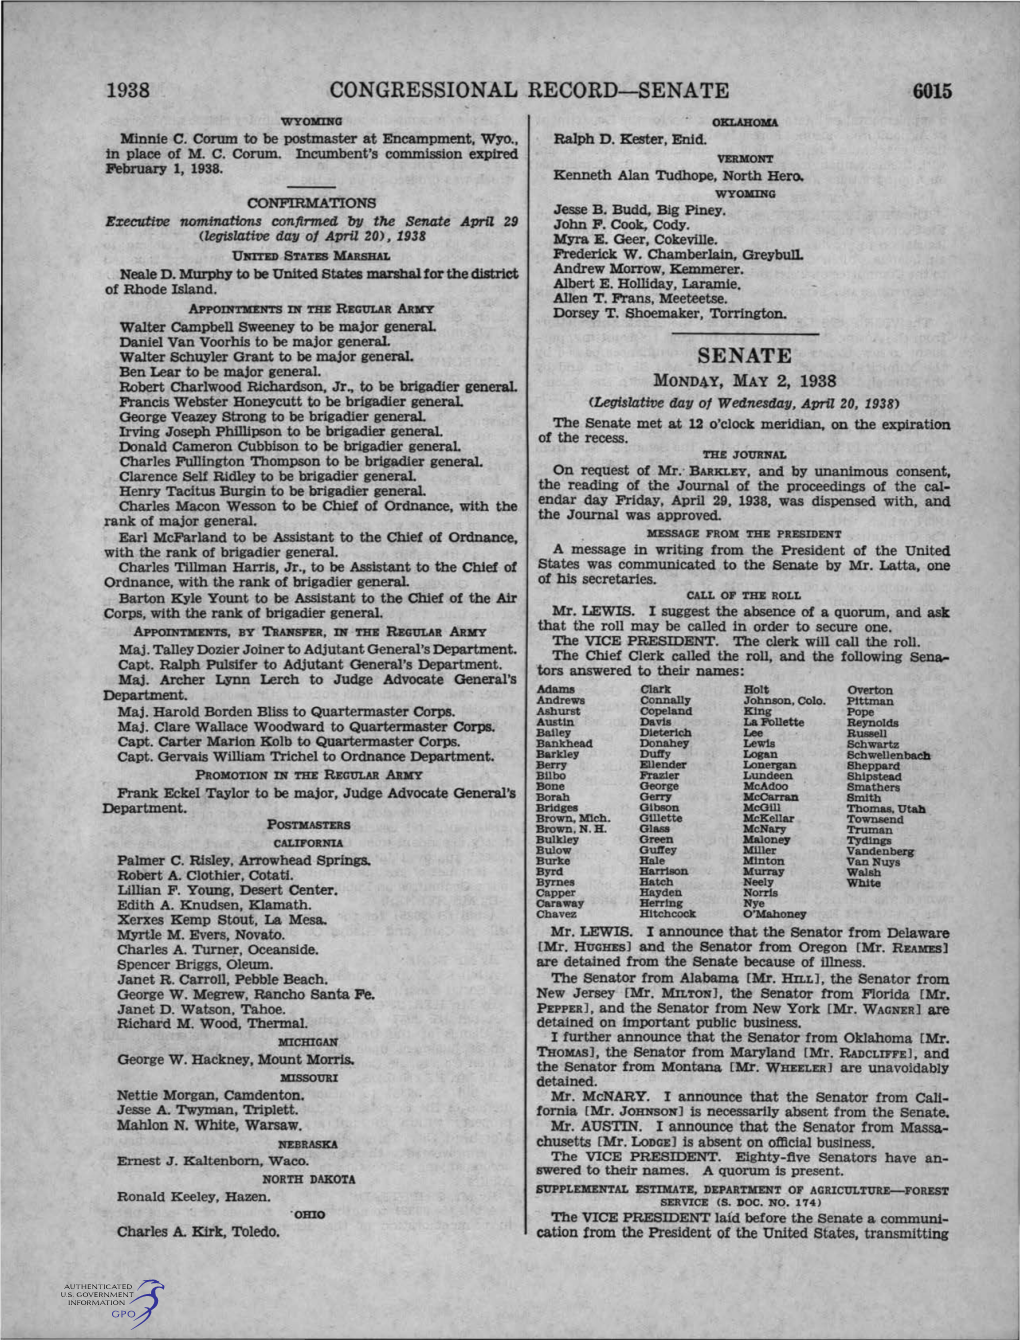 1938 CO.NGRESSIONAL RECORD-SENATE 6015 Wyoliung OKLAHOMA Mi!Lnie C